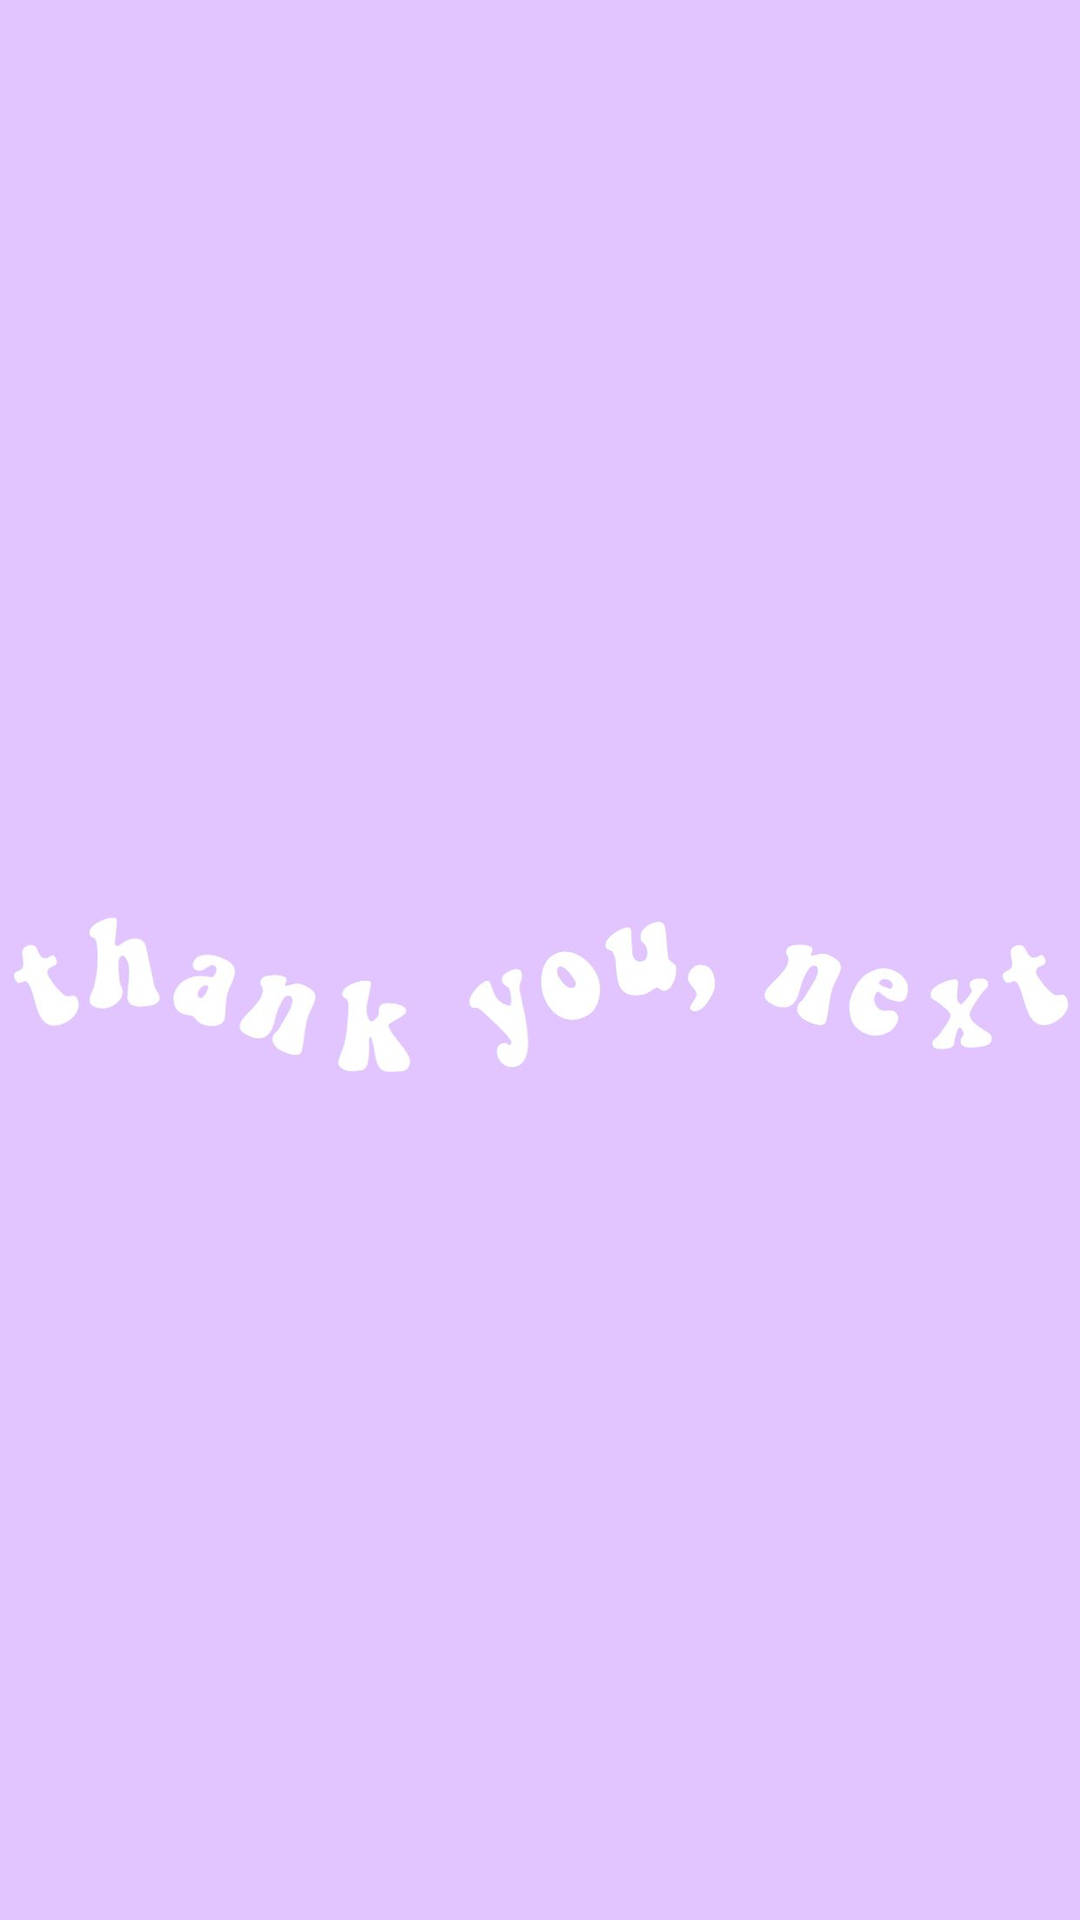 Thank You, Next Pastel Purple Tumblr Wallpaper